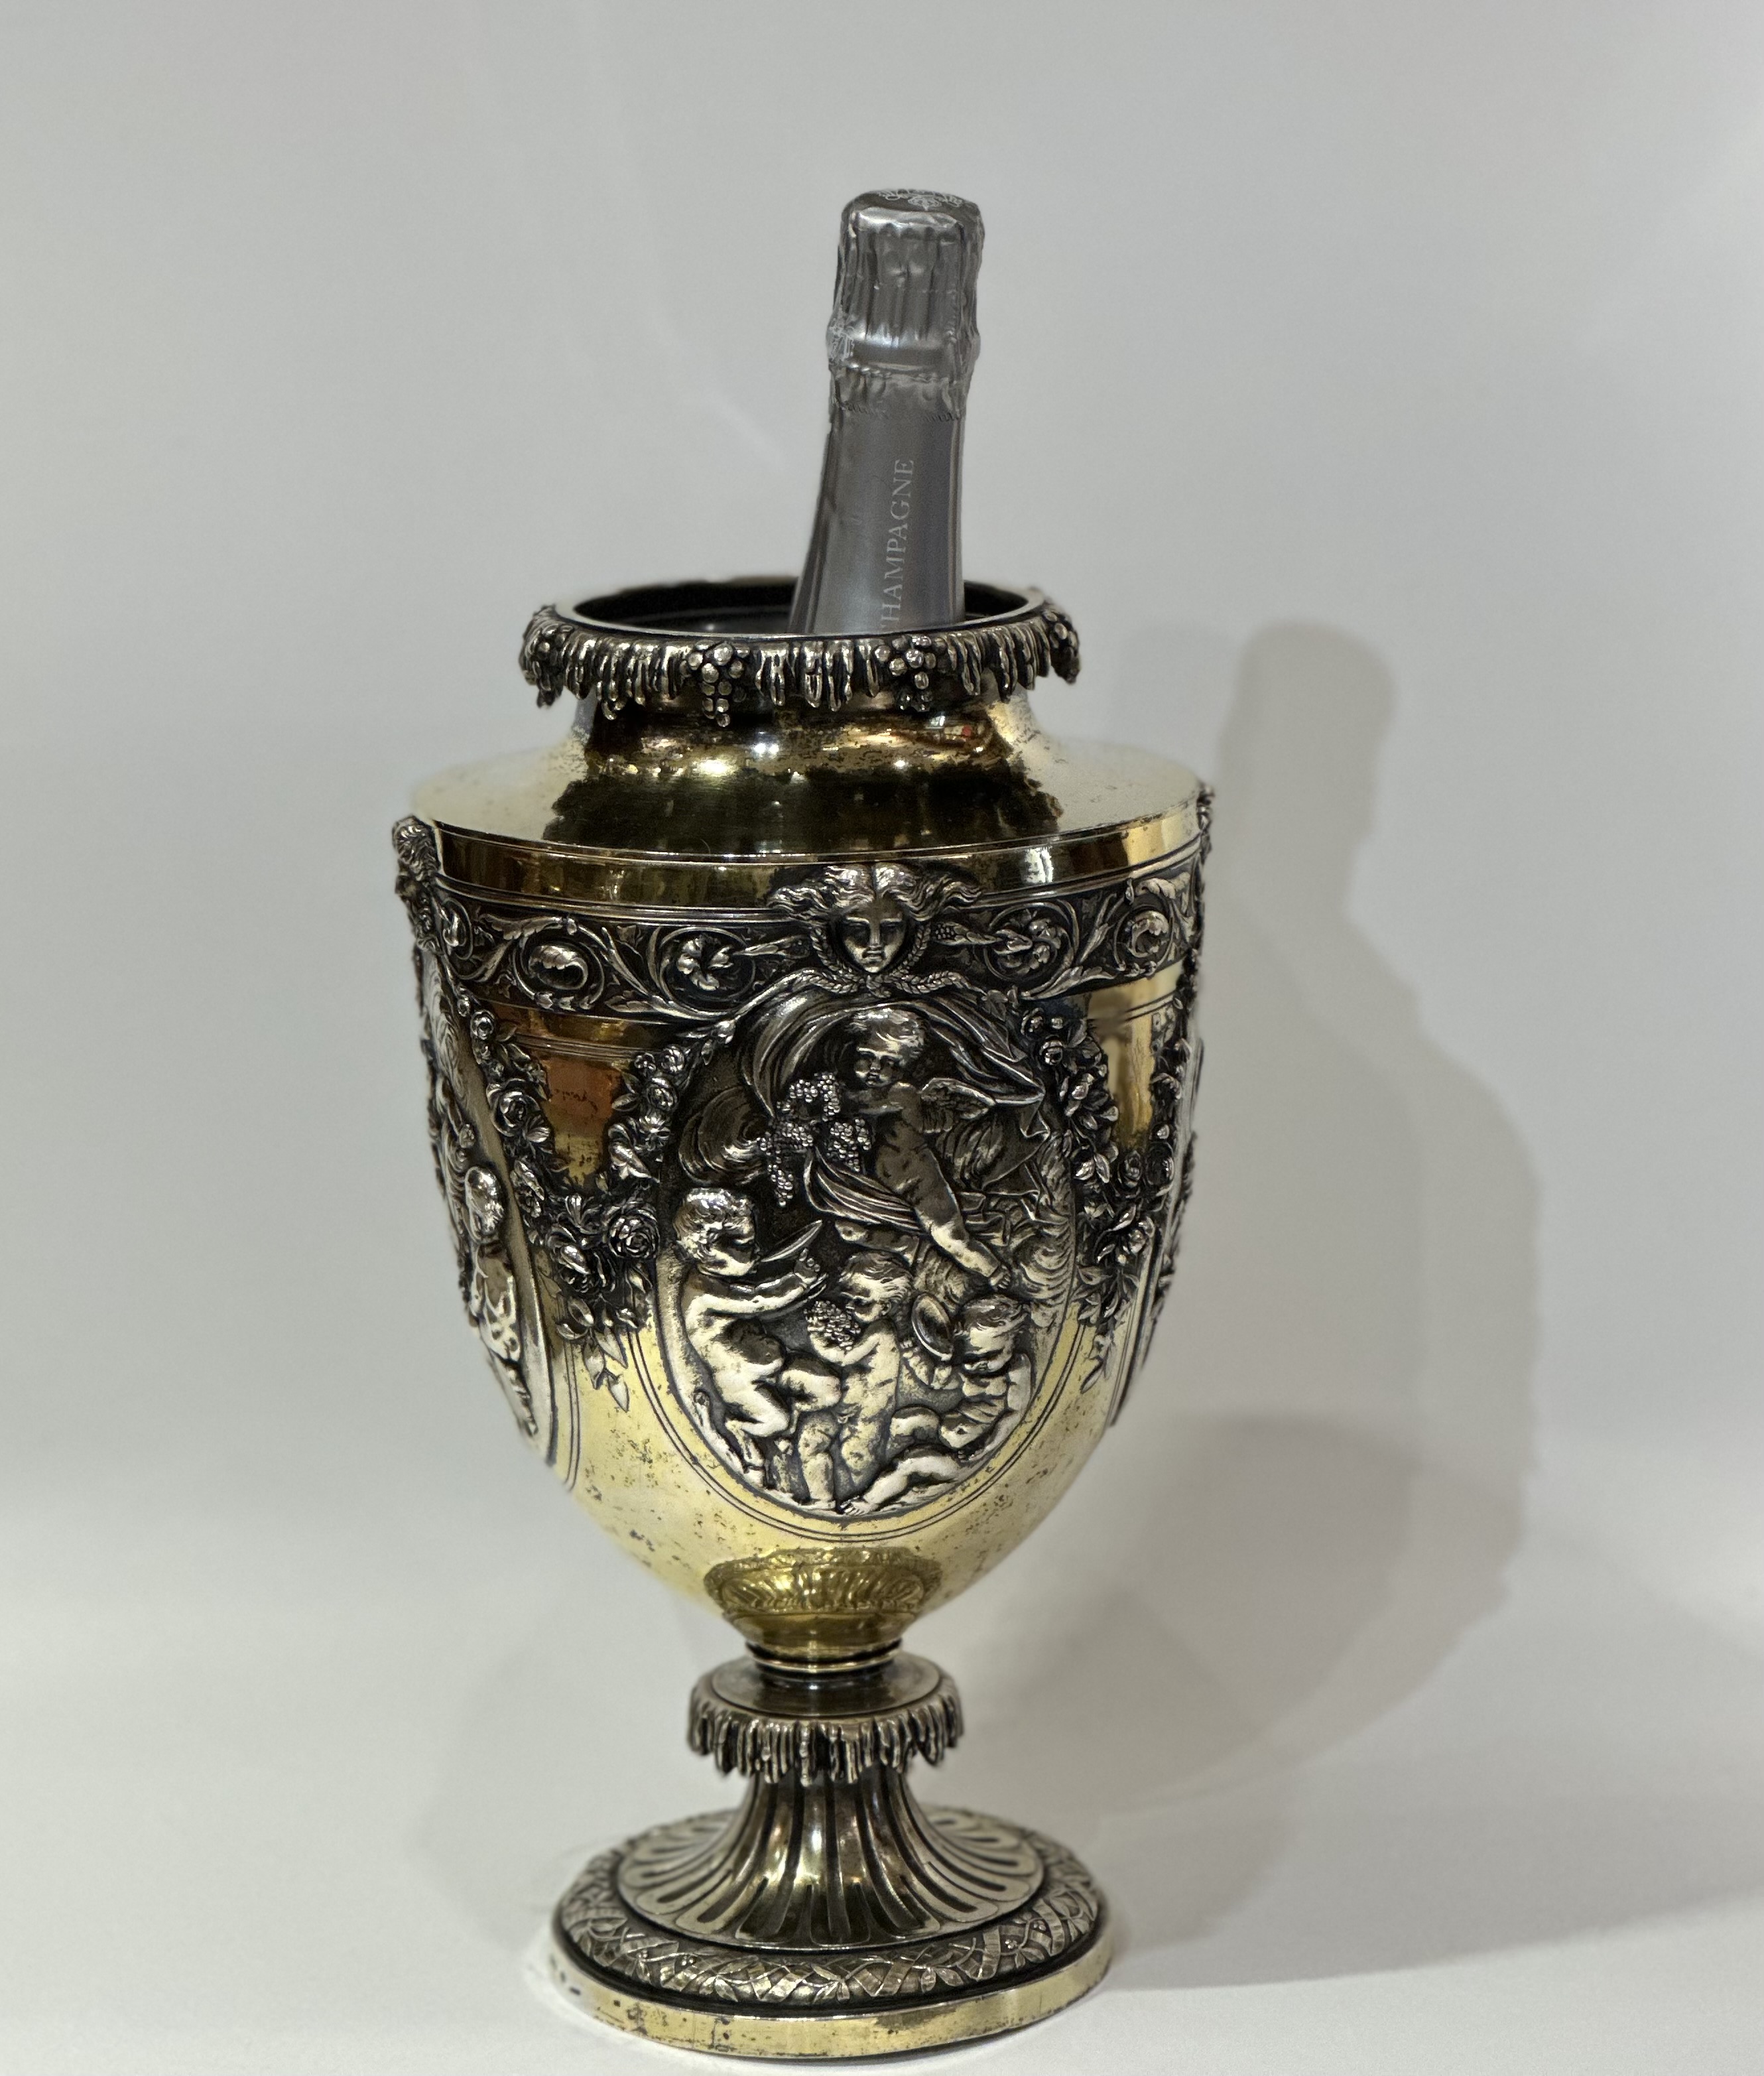 Ведро для шампанского, Франция, фирма "Кристофль", XIX век